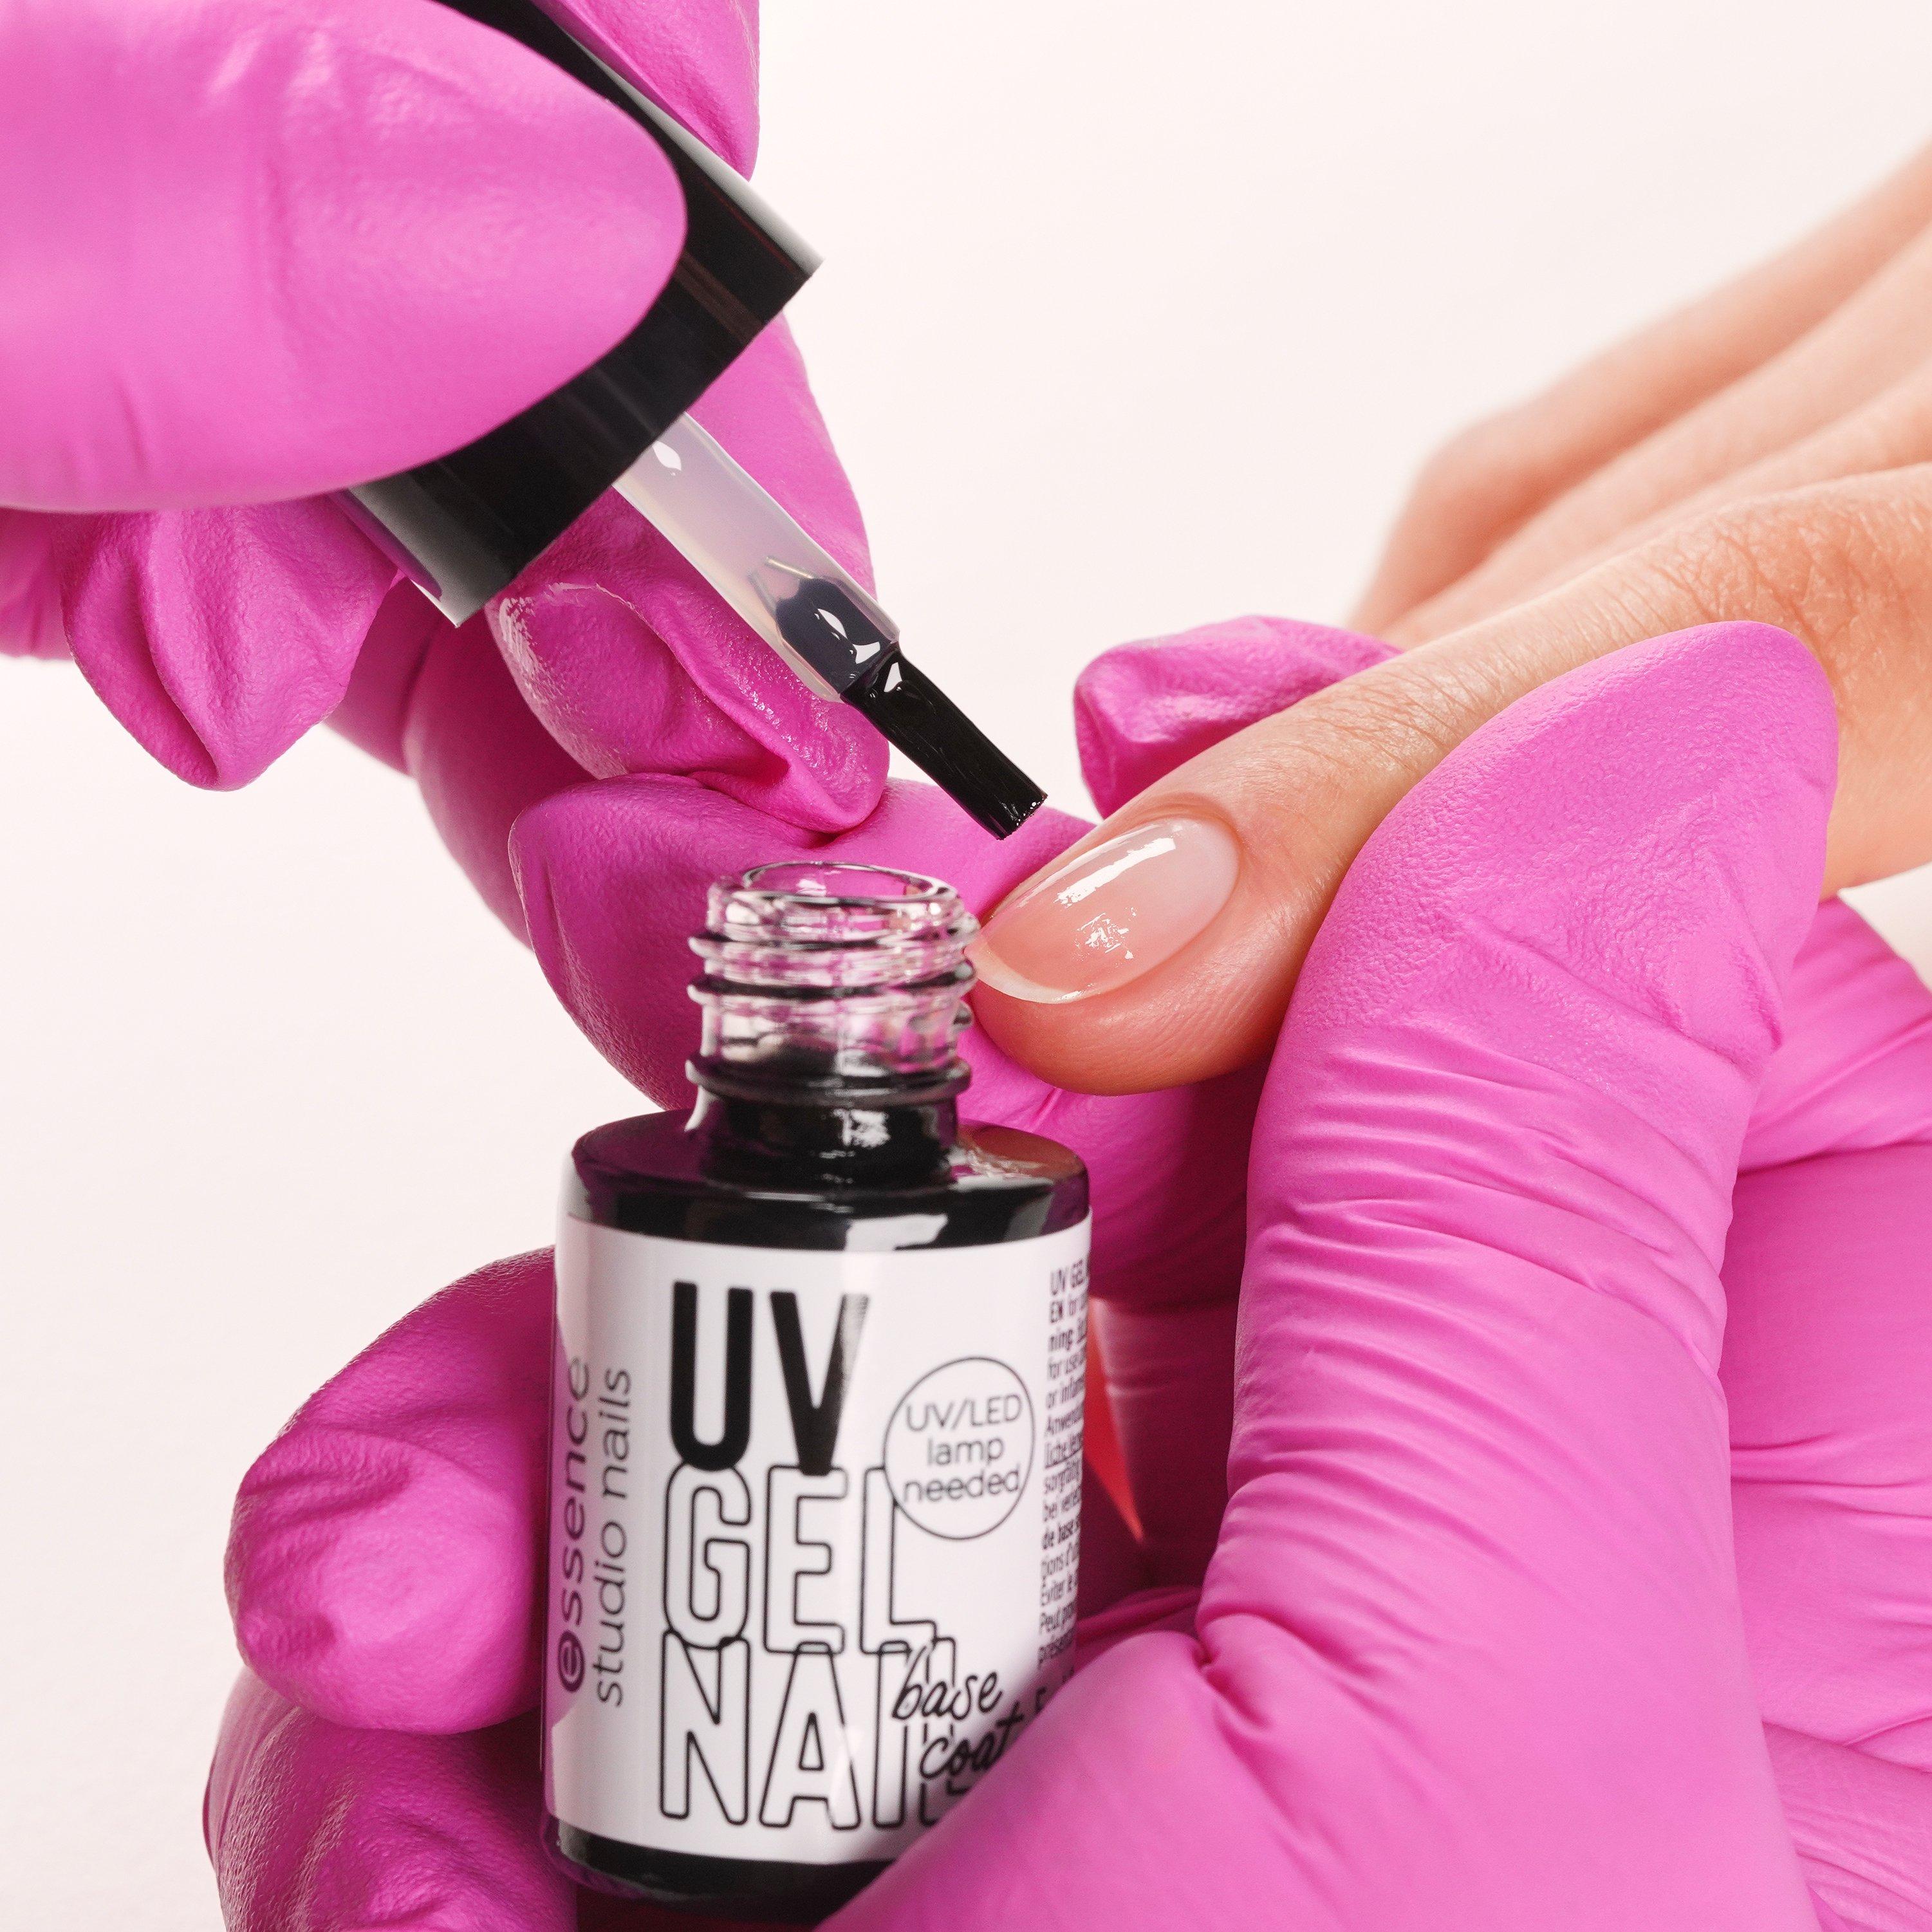 Apply the essence UV nail polish base coat